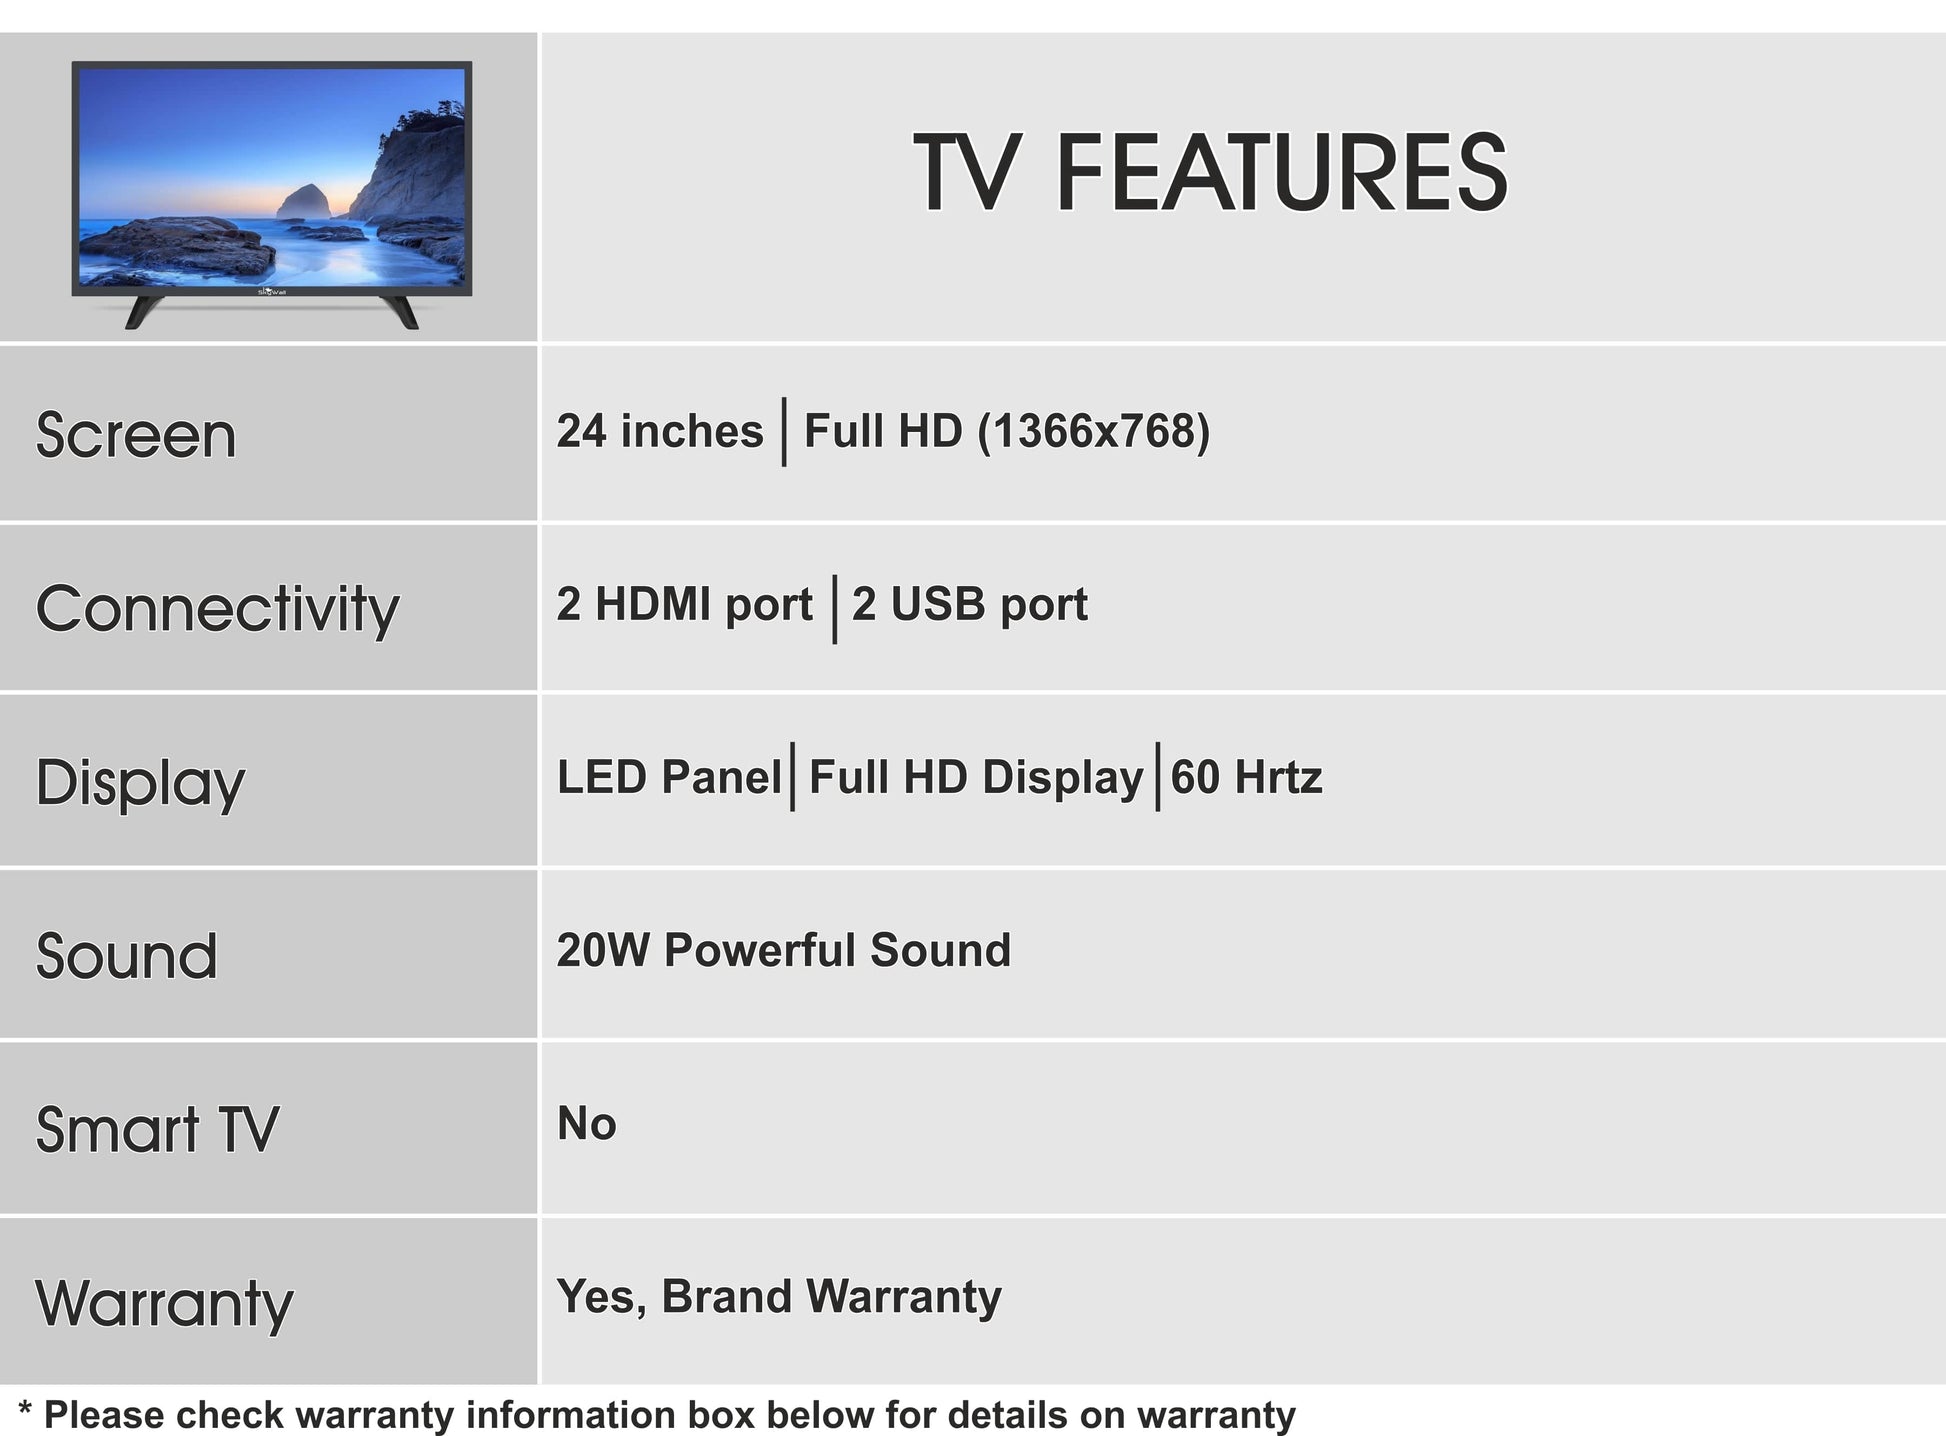 SkyWall™ TV HD Ready TV SkyWall 60.96 cm (24 inch) HD Ready LED TV 24SWATV With A+ Grade Panel (slim bezels)